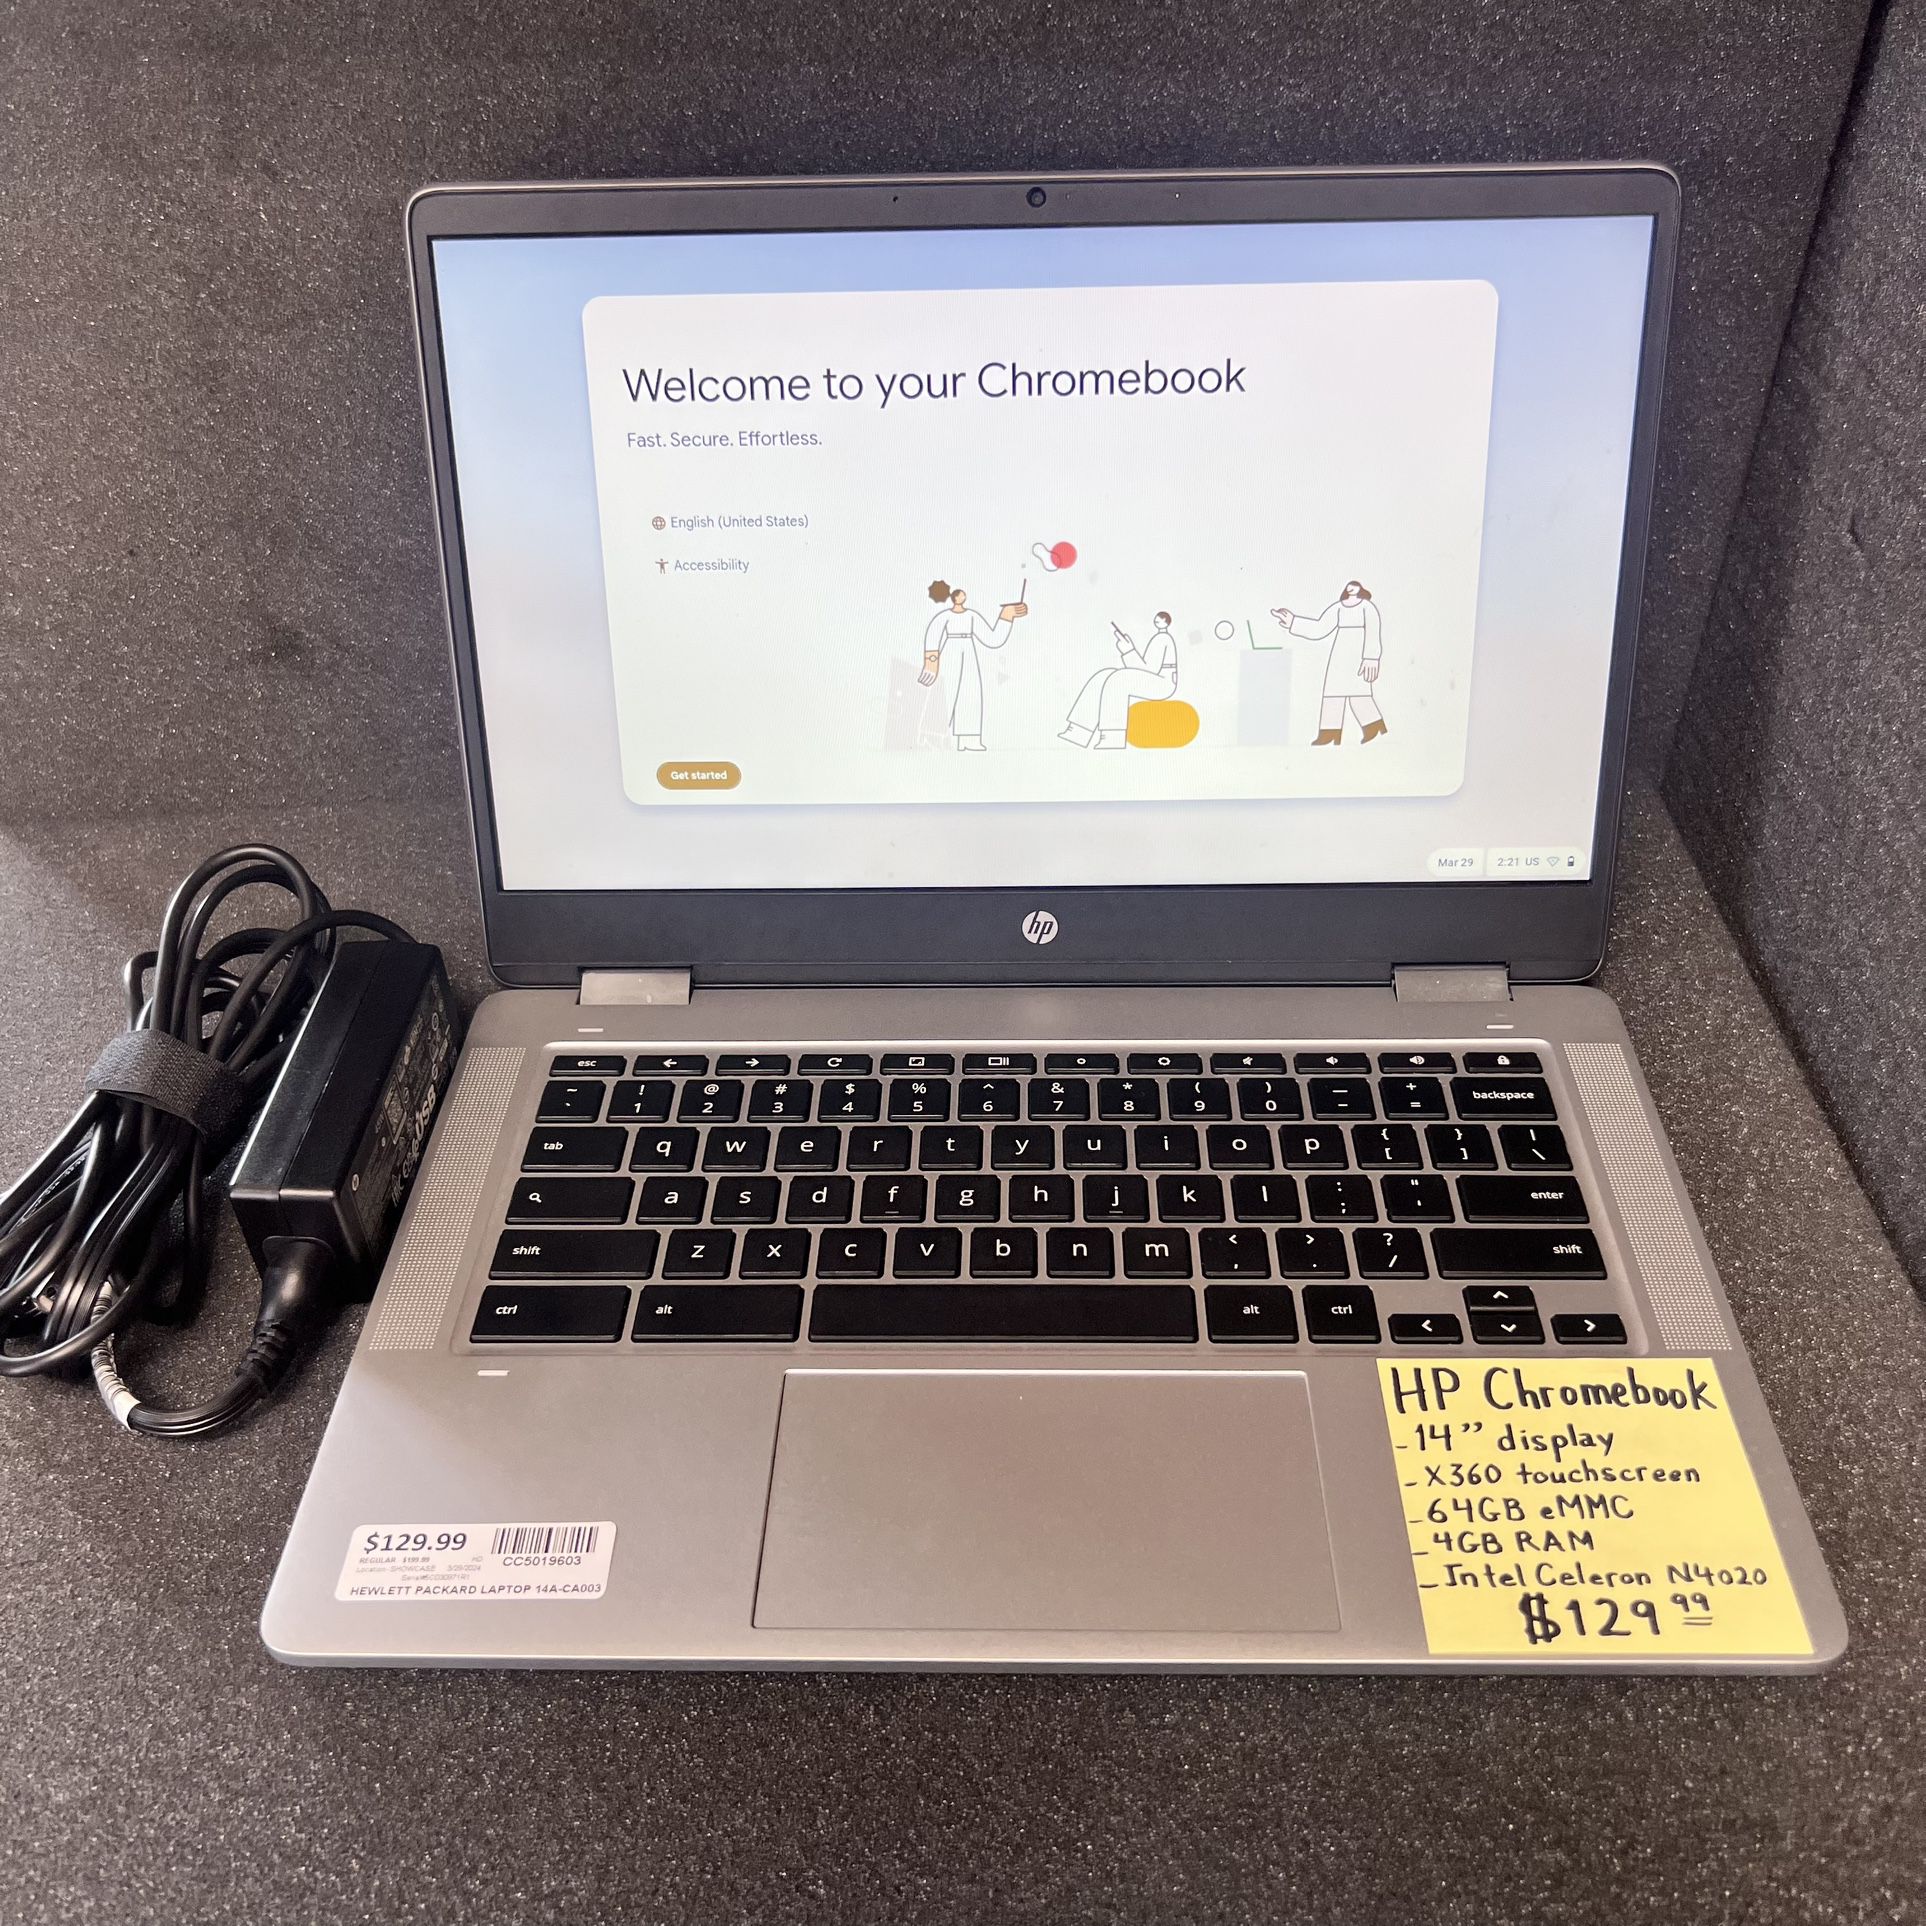 HP Chromebook 14” x360 Touchscreen 64GB eMMC 4GB RAM Intel Celeron N4020 Laptop 